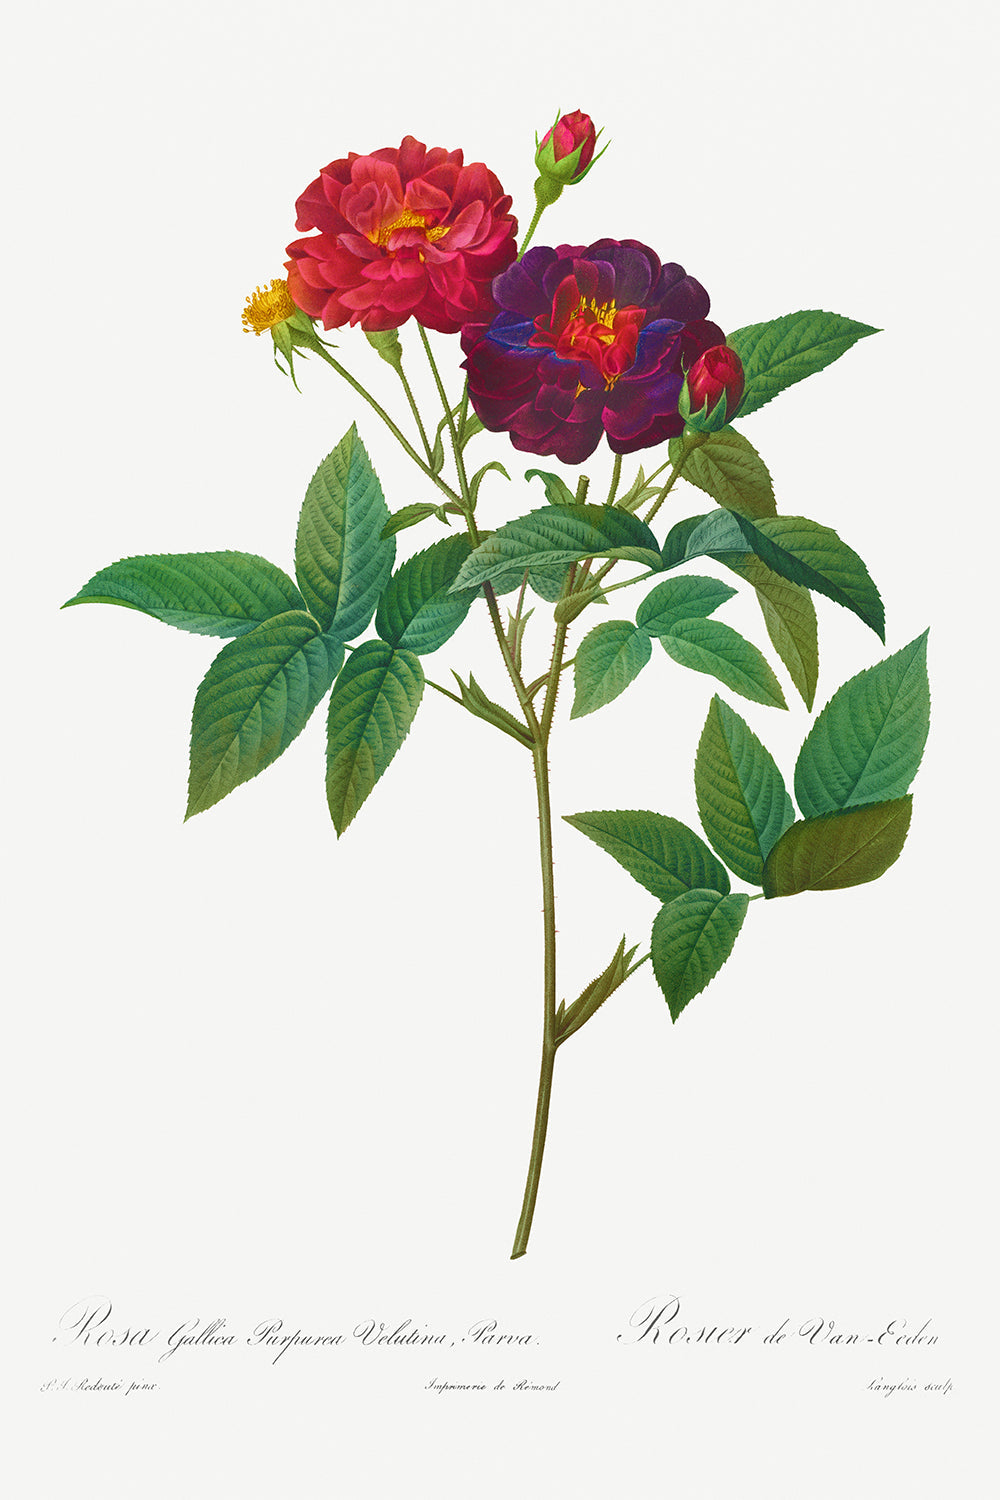 Botanical Plant Print - Rosa Gallica Purpurea Velutina Parva by Pierre Joseph Redoute